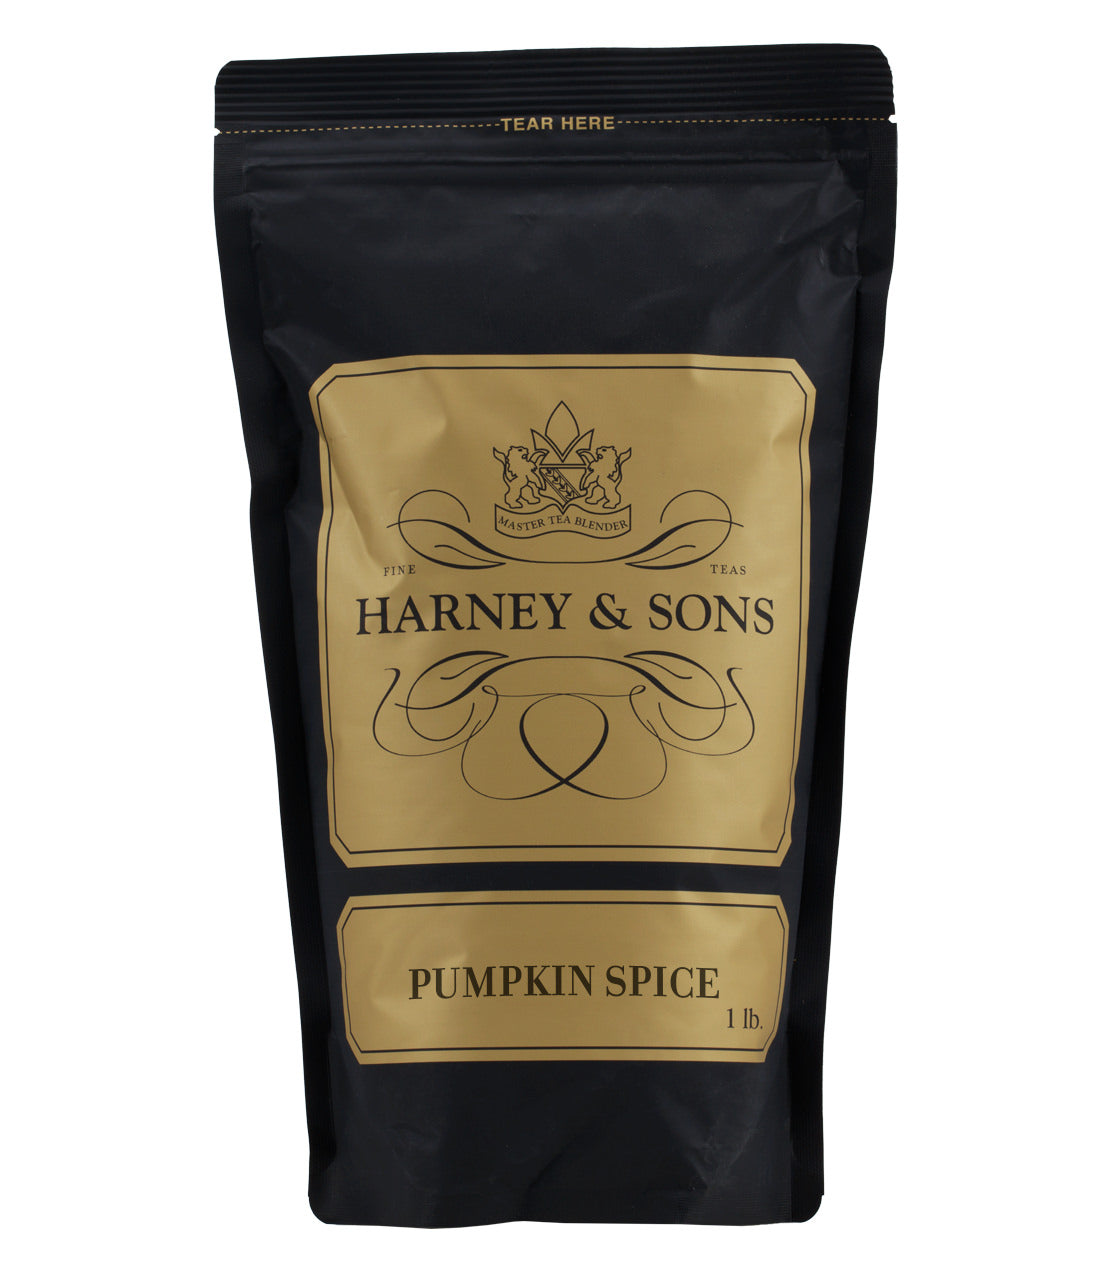 Pumpkin Spice - Loose 1 lb. Bag - Harney & Sons Fine Teas